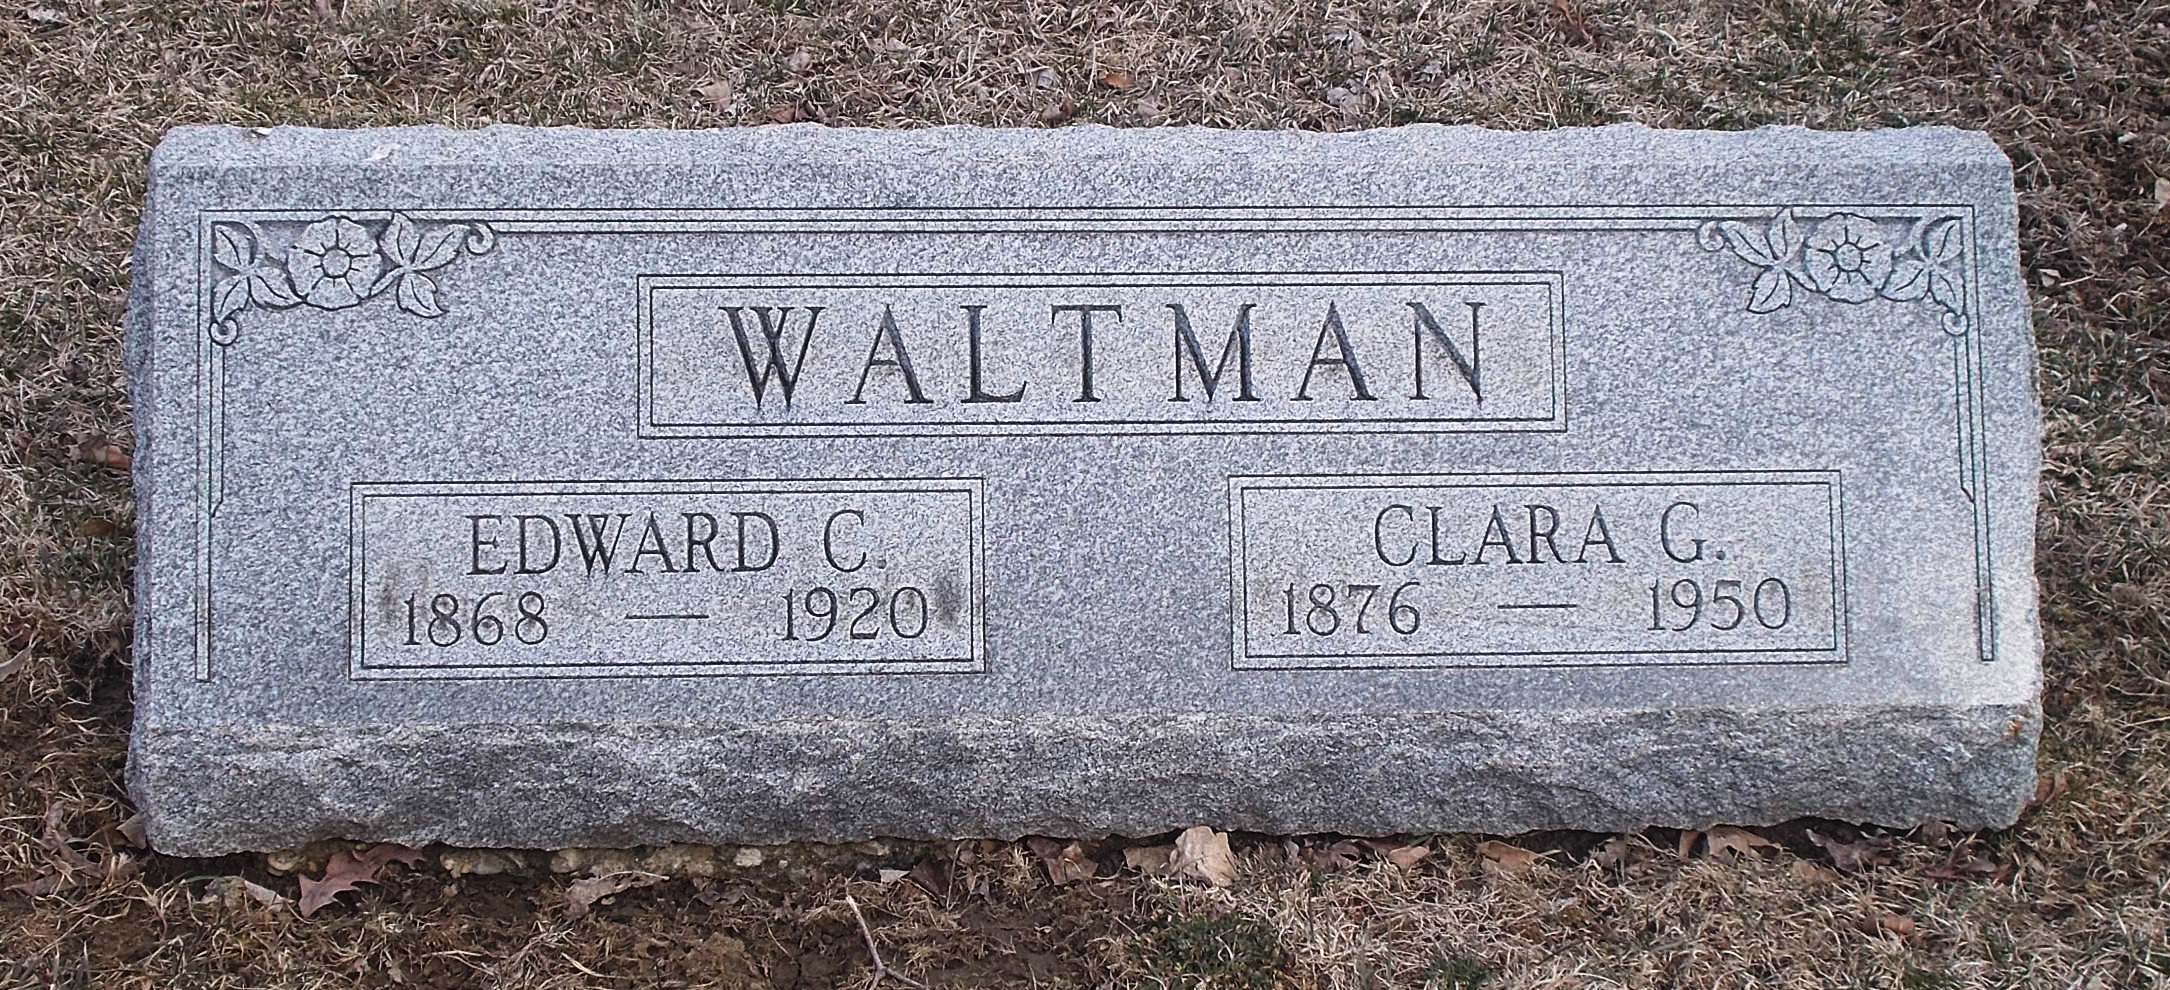 Edward C Waltman